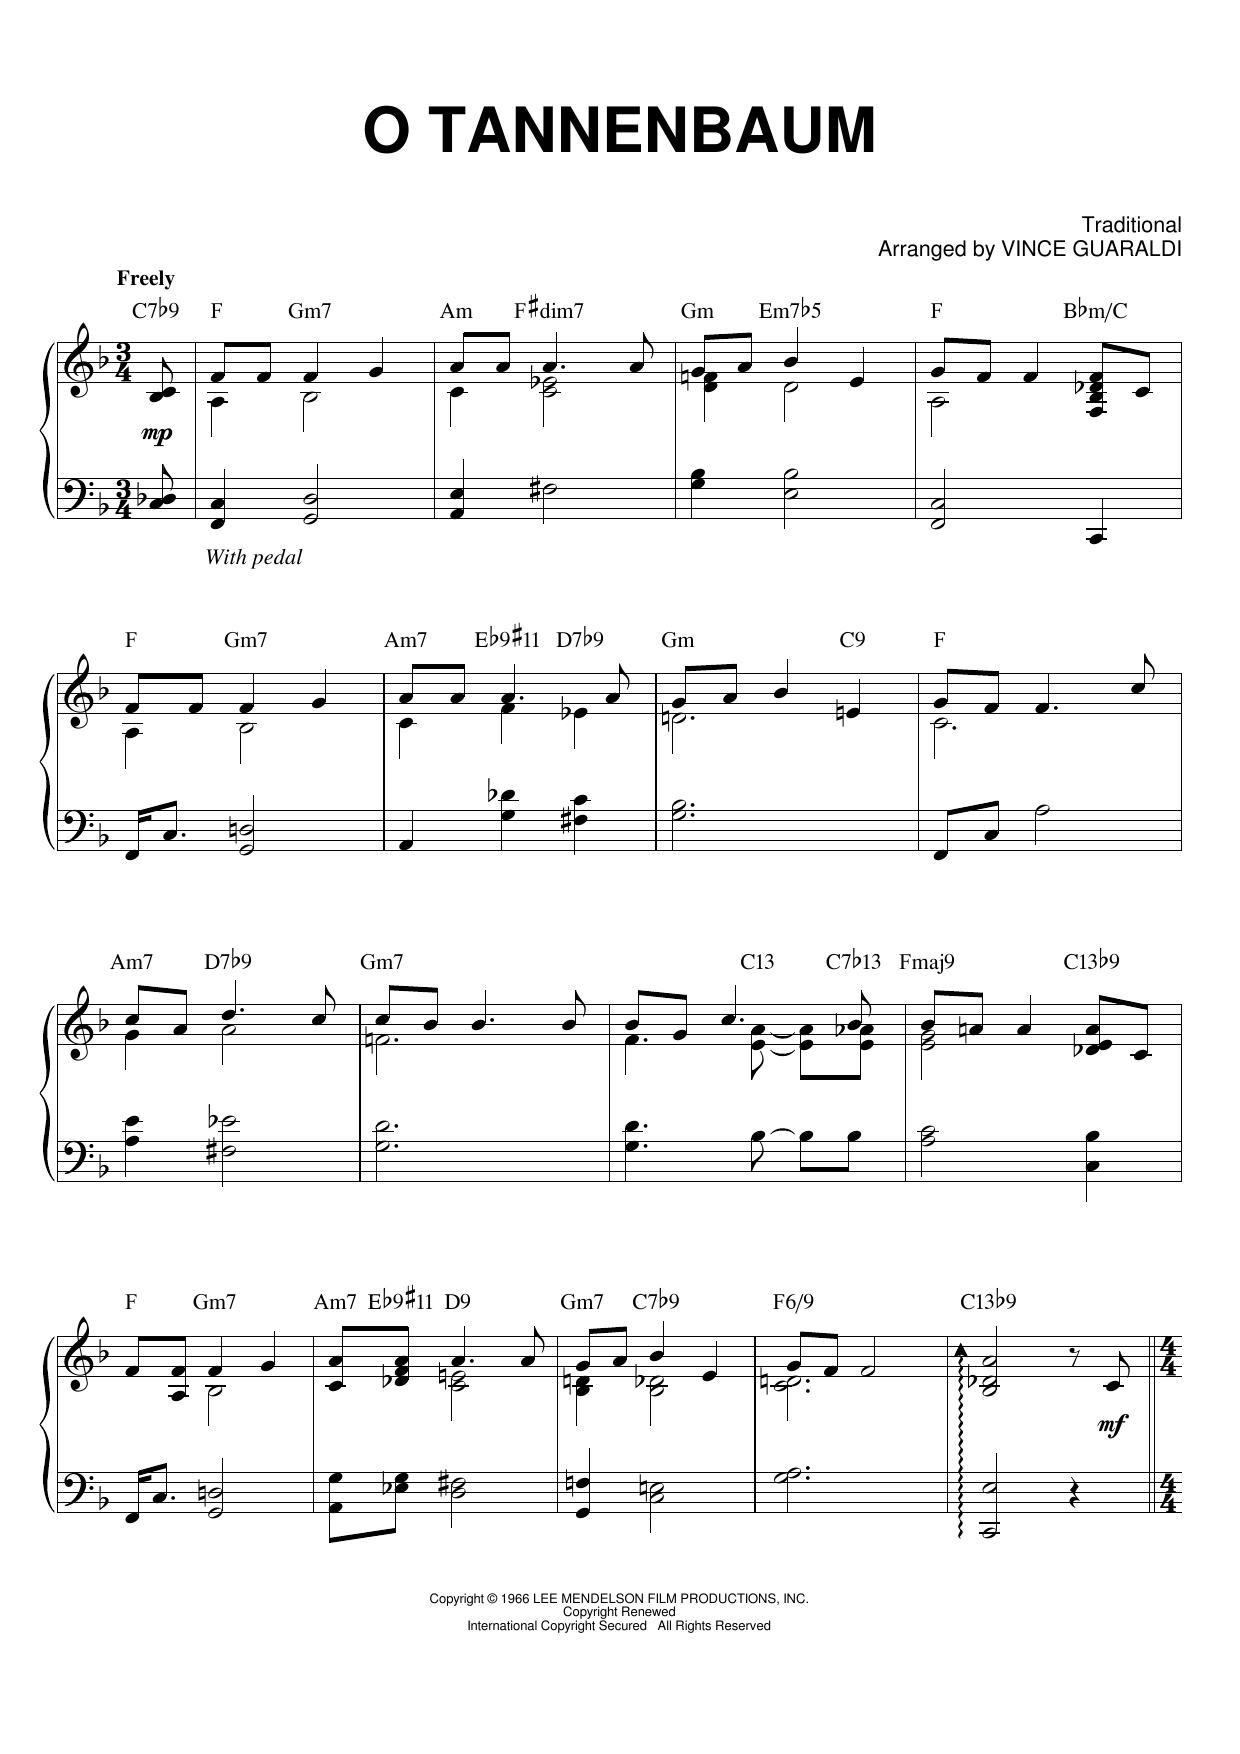 Vince Guaraldi O Tannenbaum Sheet Music Notes & Chords for Piano Transcription - Download or Print PDF